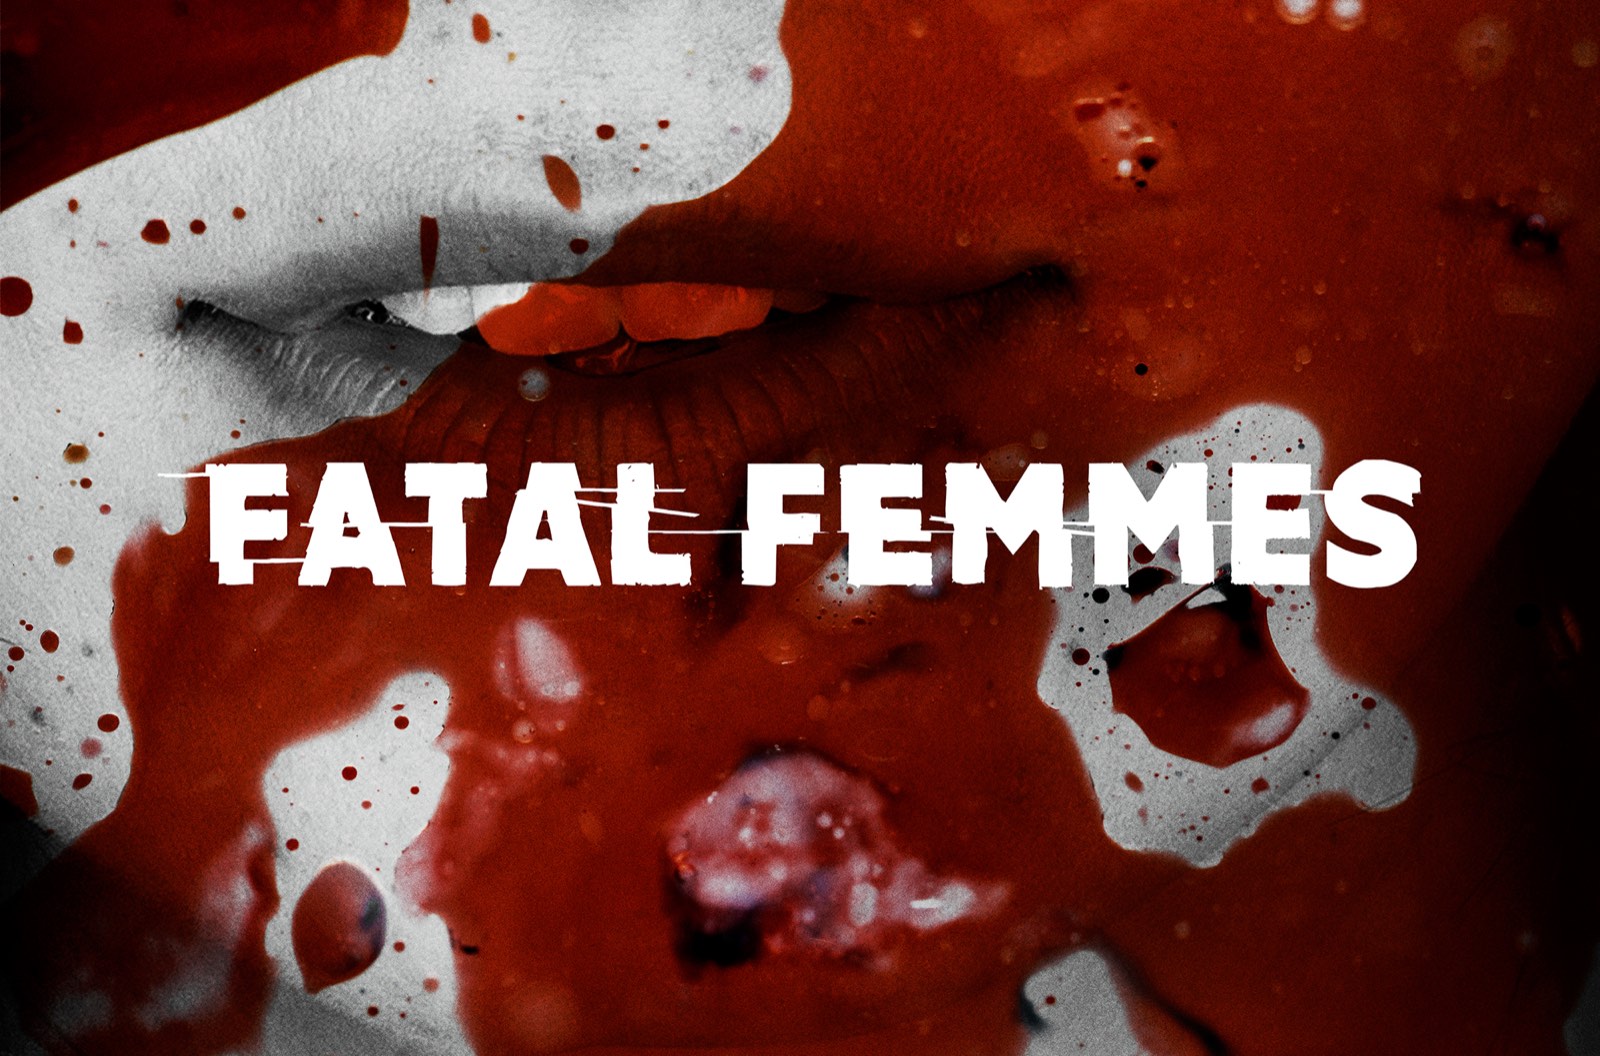 Fatal Femmes